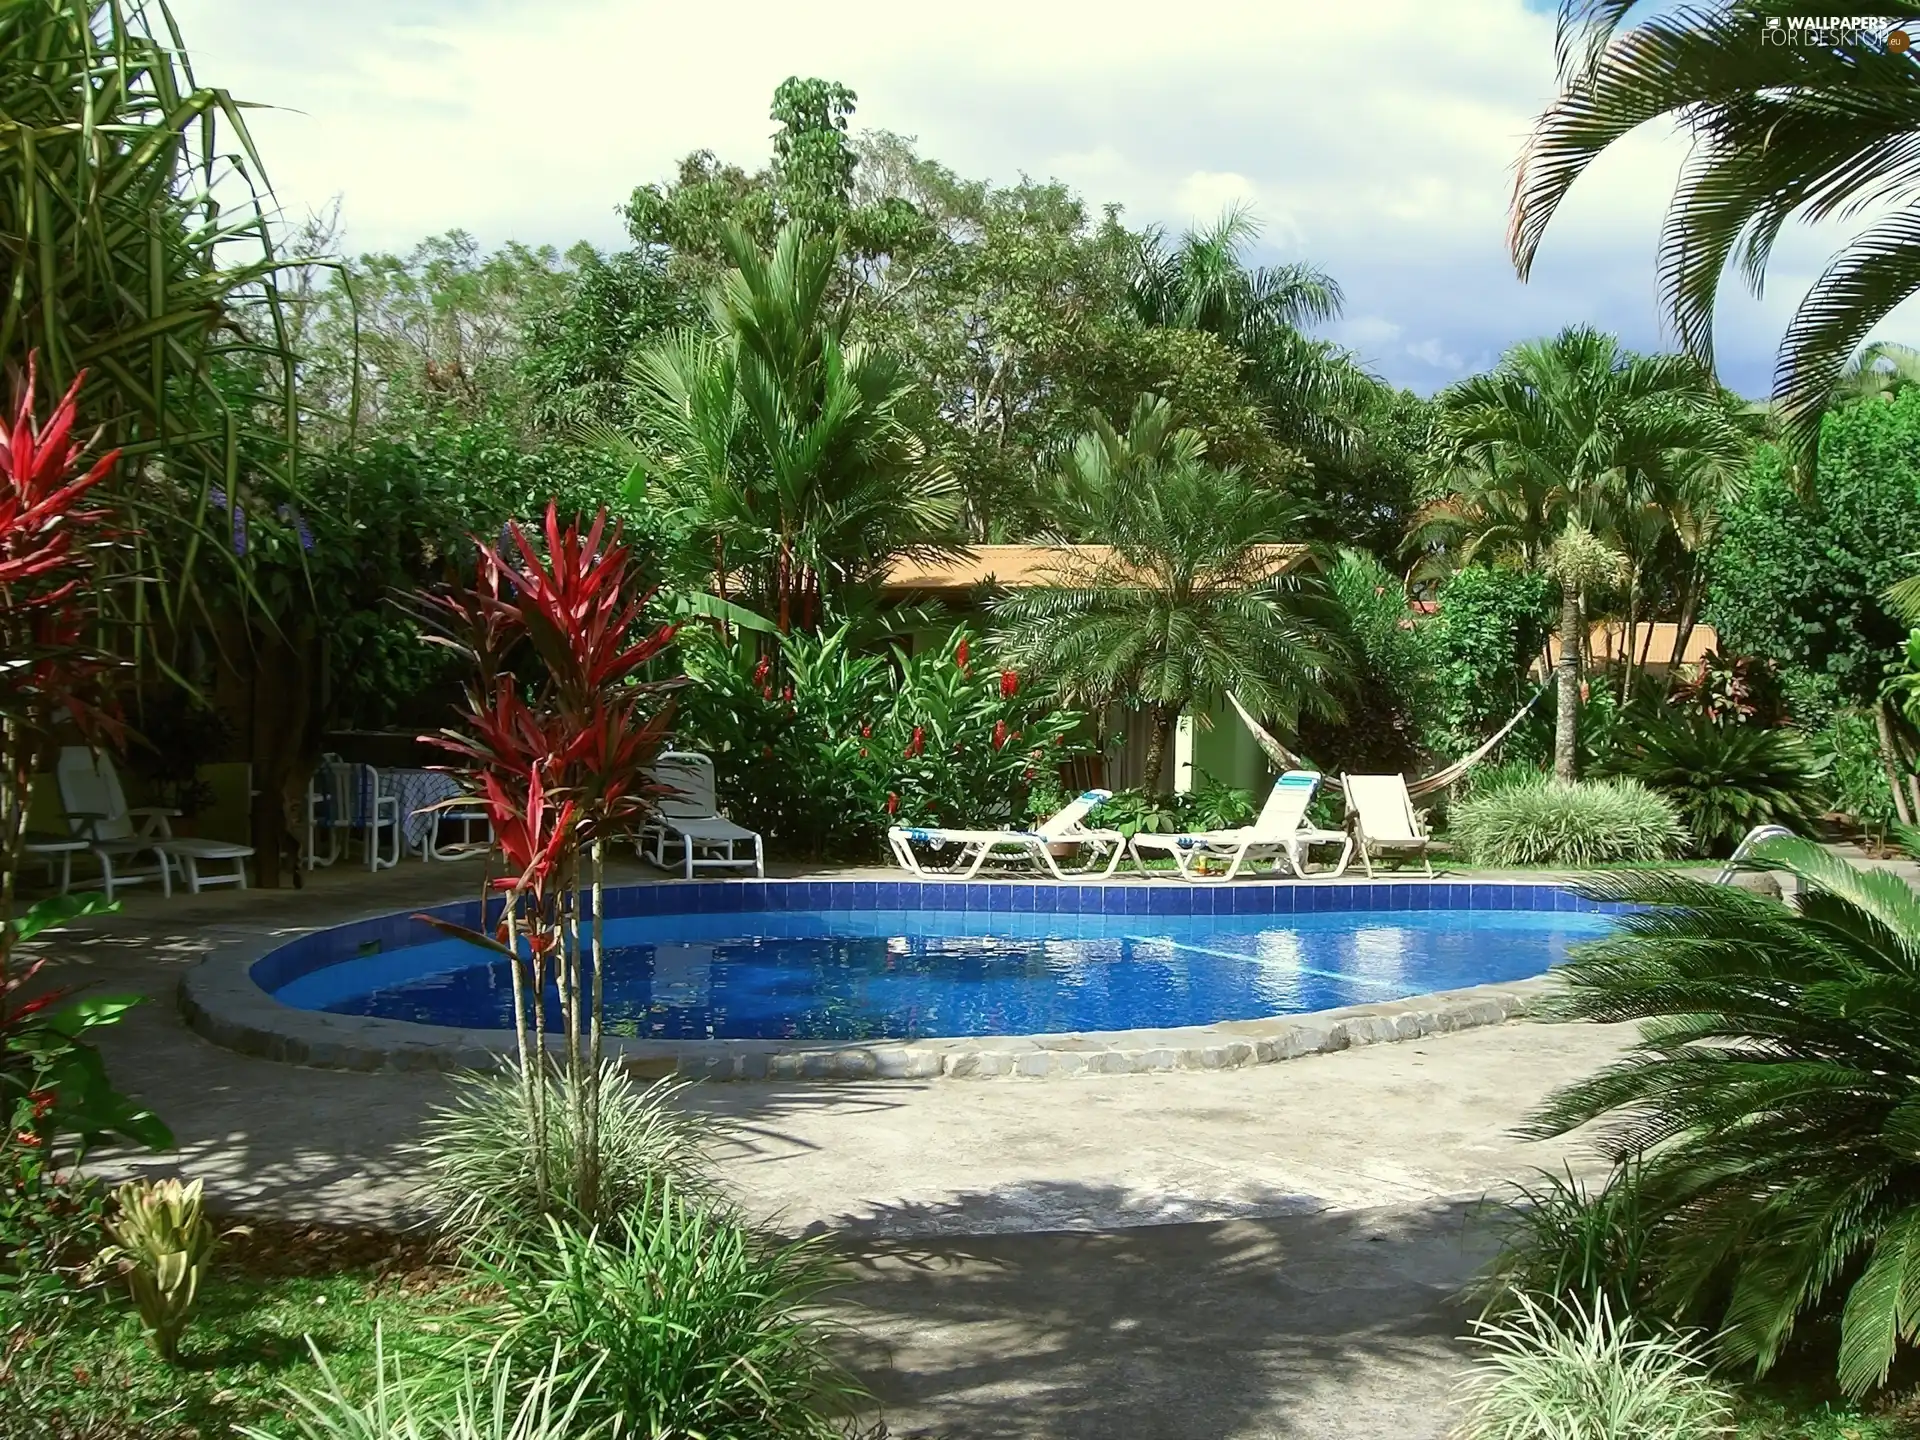 Pool, Palms, Garden, deck chair